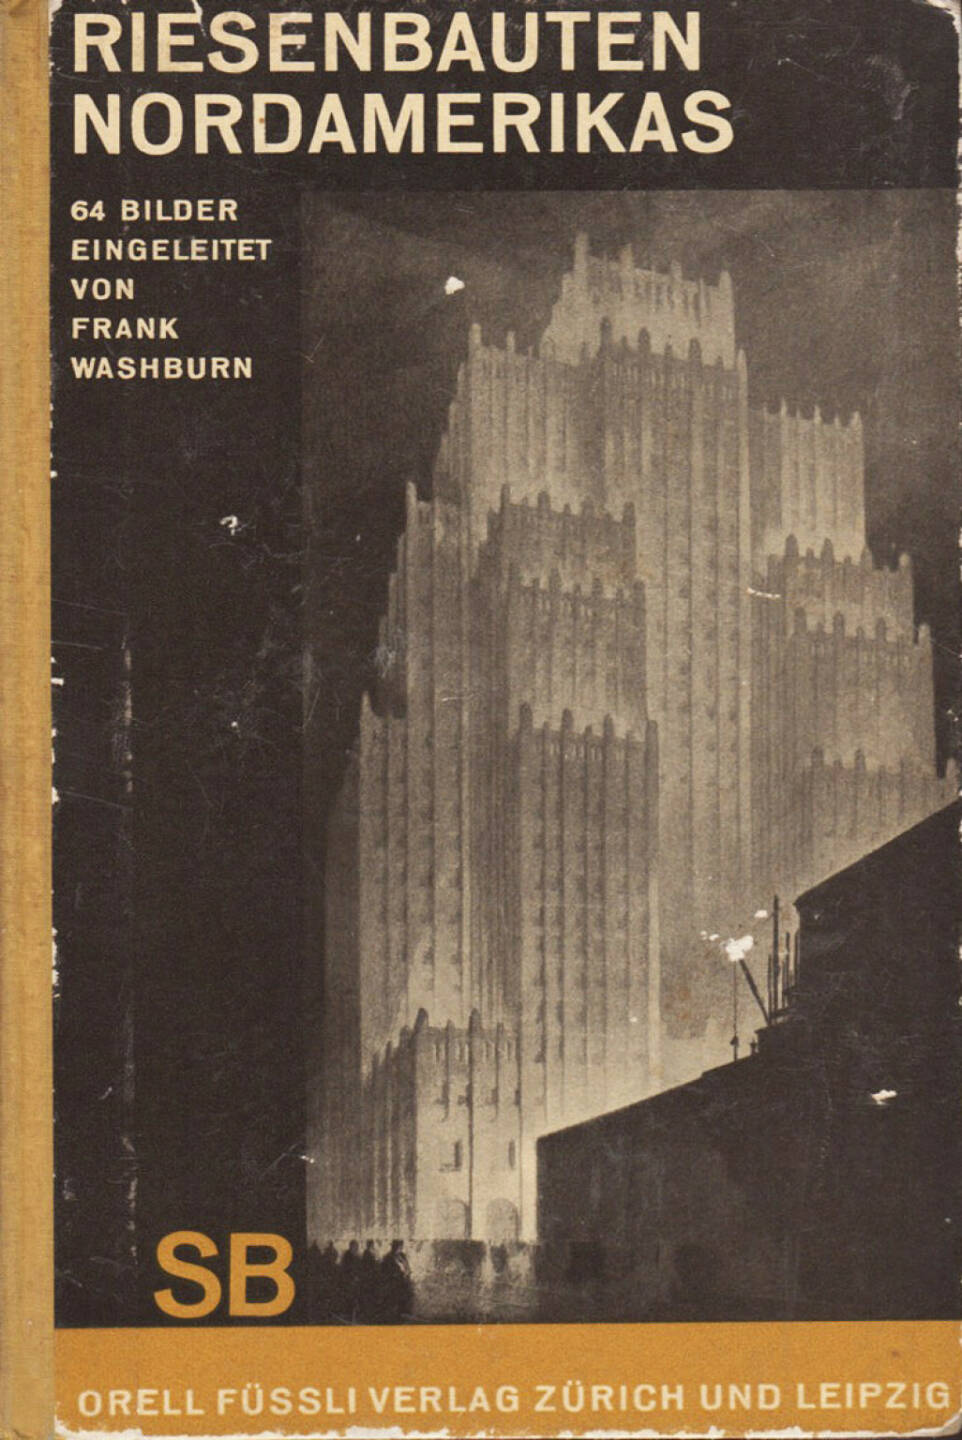 Frank Washburn - Riesenbauten Nordamerikas, Orell Füssli Verlag 1930, Cover - http://josefchladek.com/book/frank_washburn_-_riesenbauten_nordamerikas